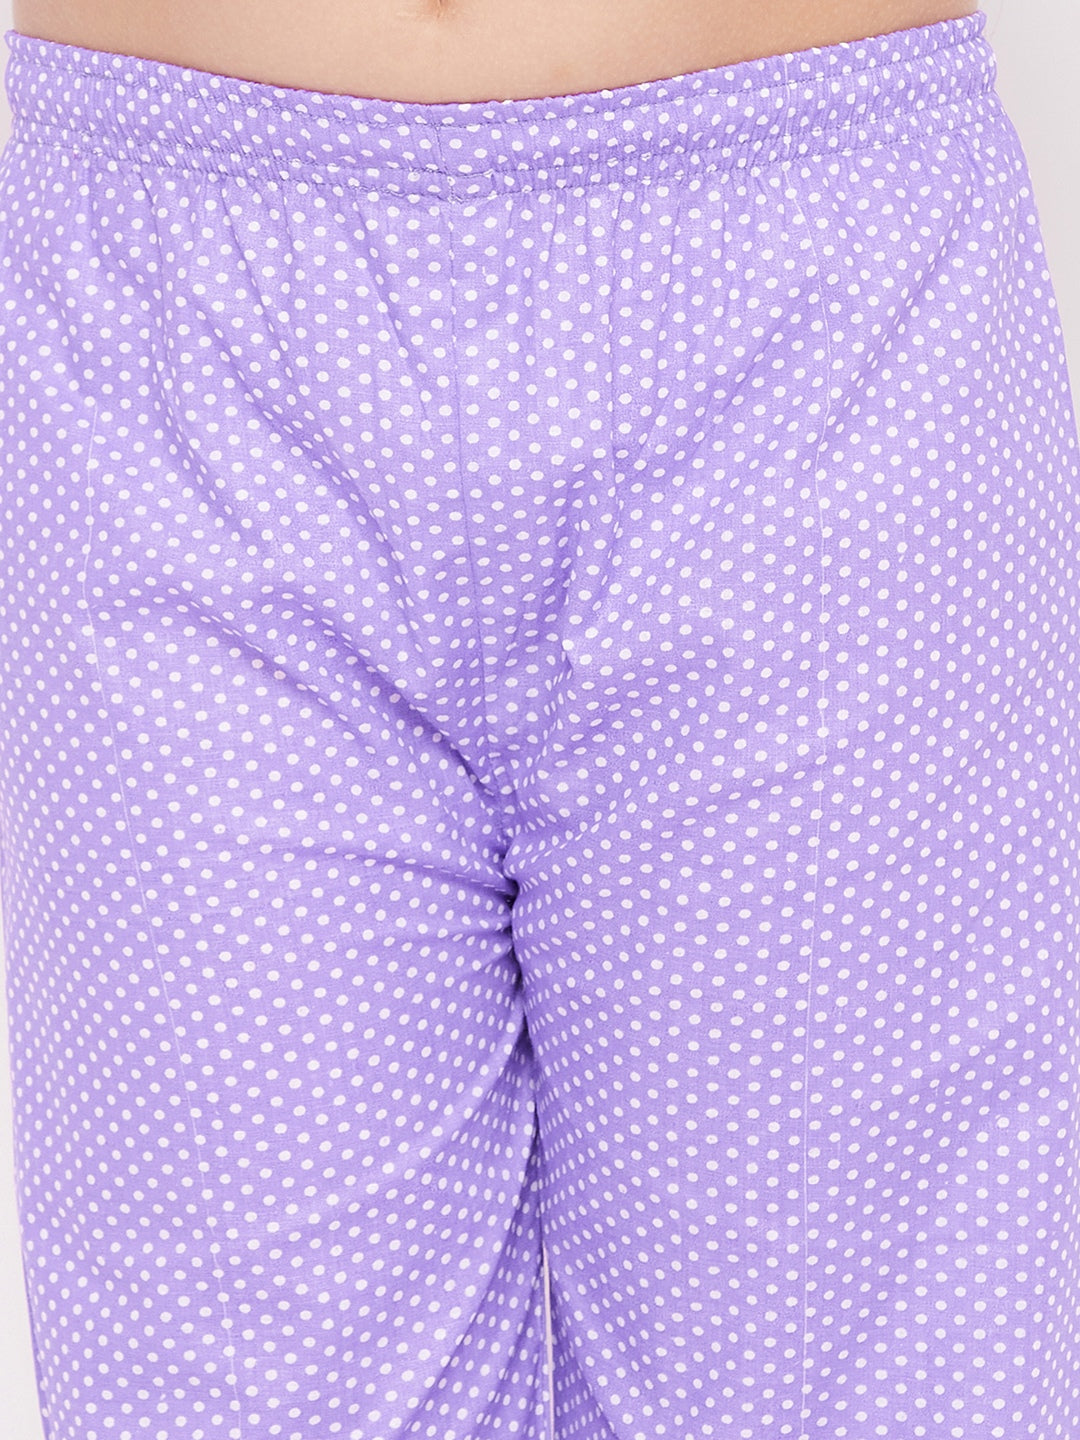 Girl's Purple Polka Dot Cotton Nightsuit  - NOZ2TOZ KIDS